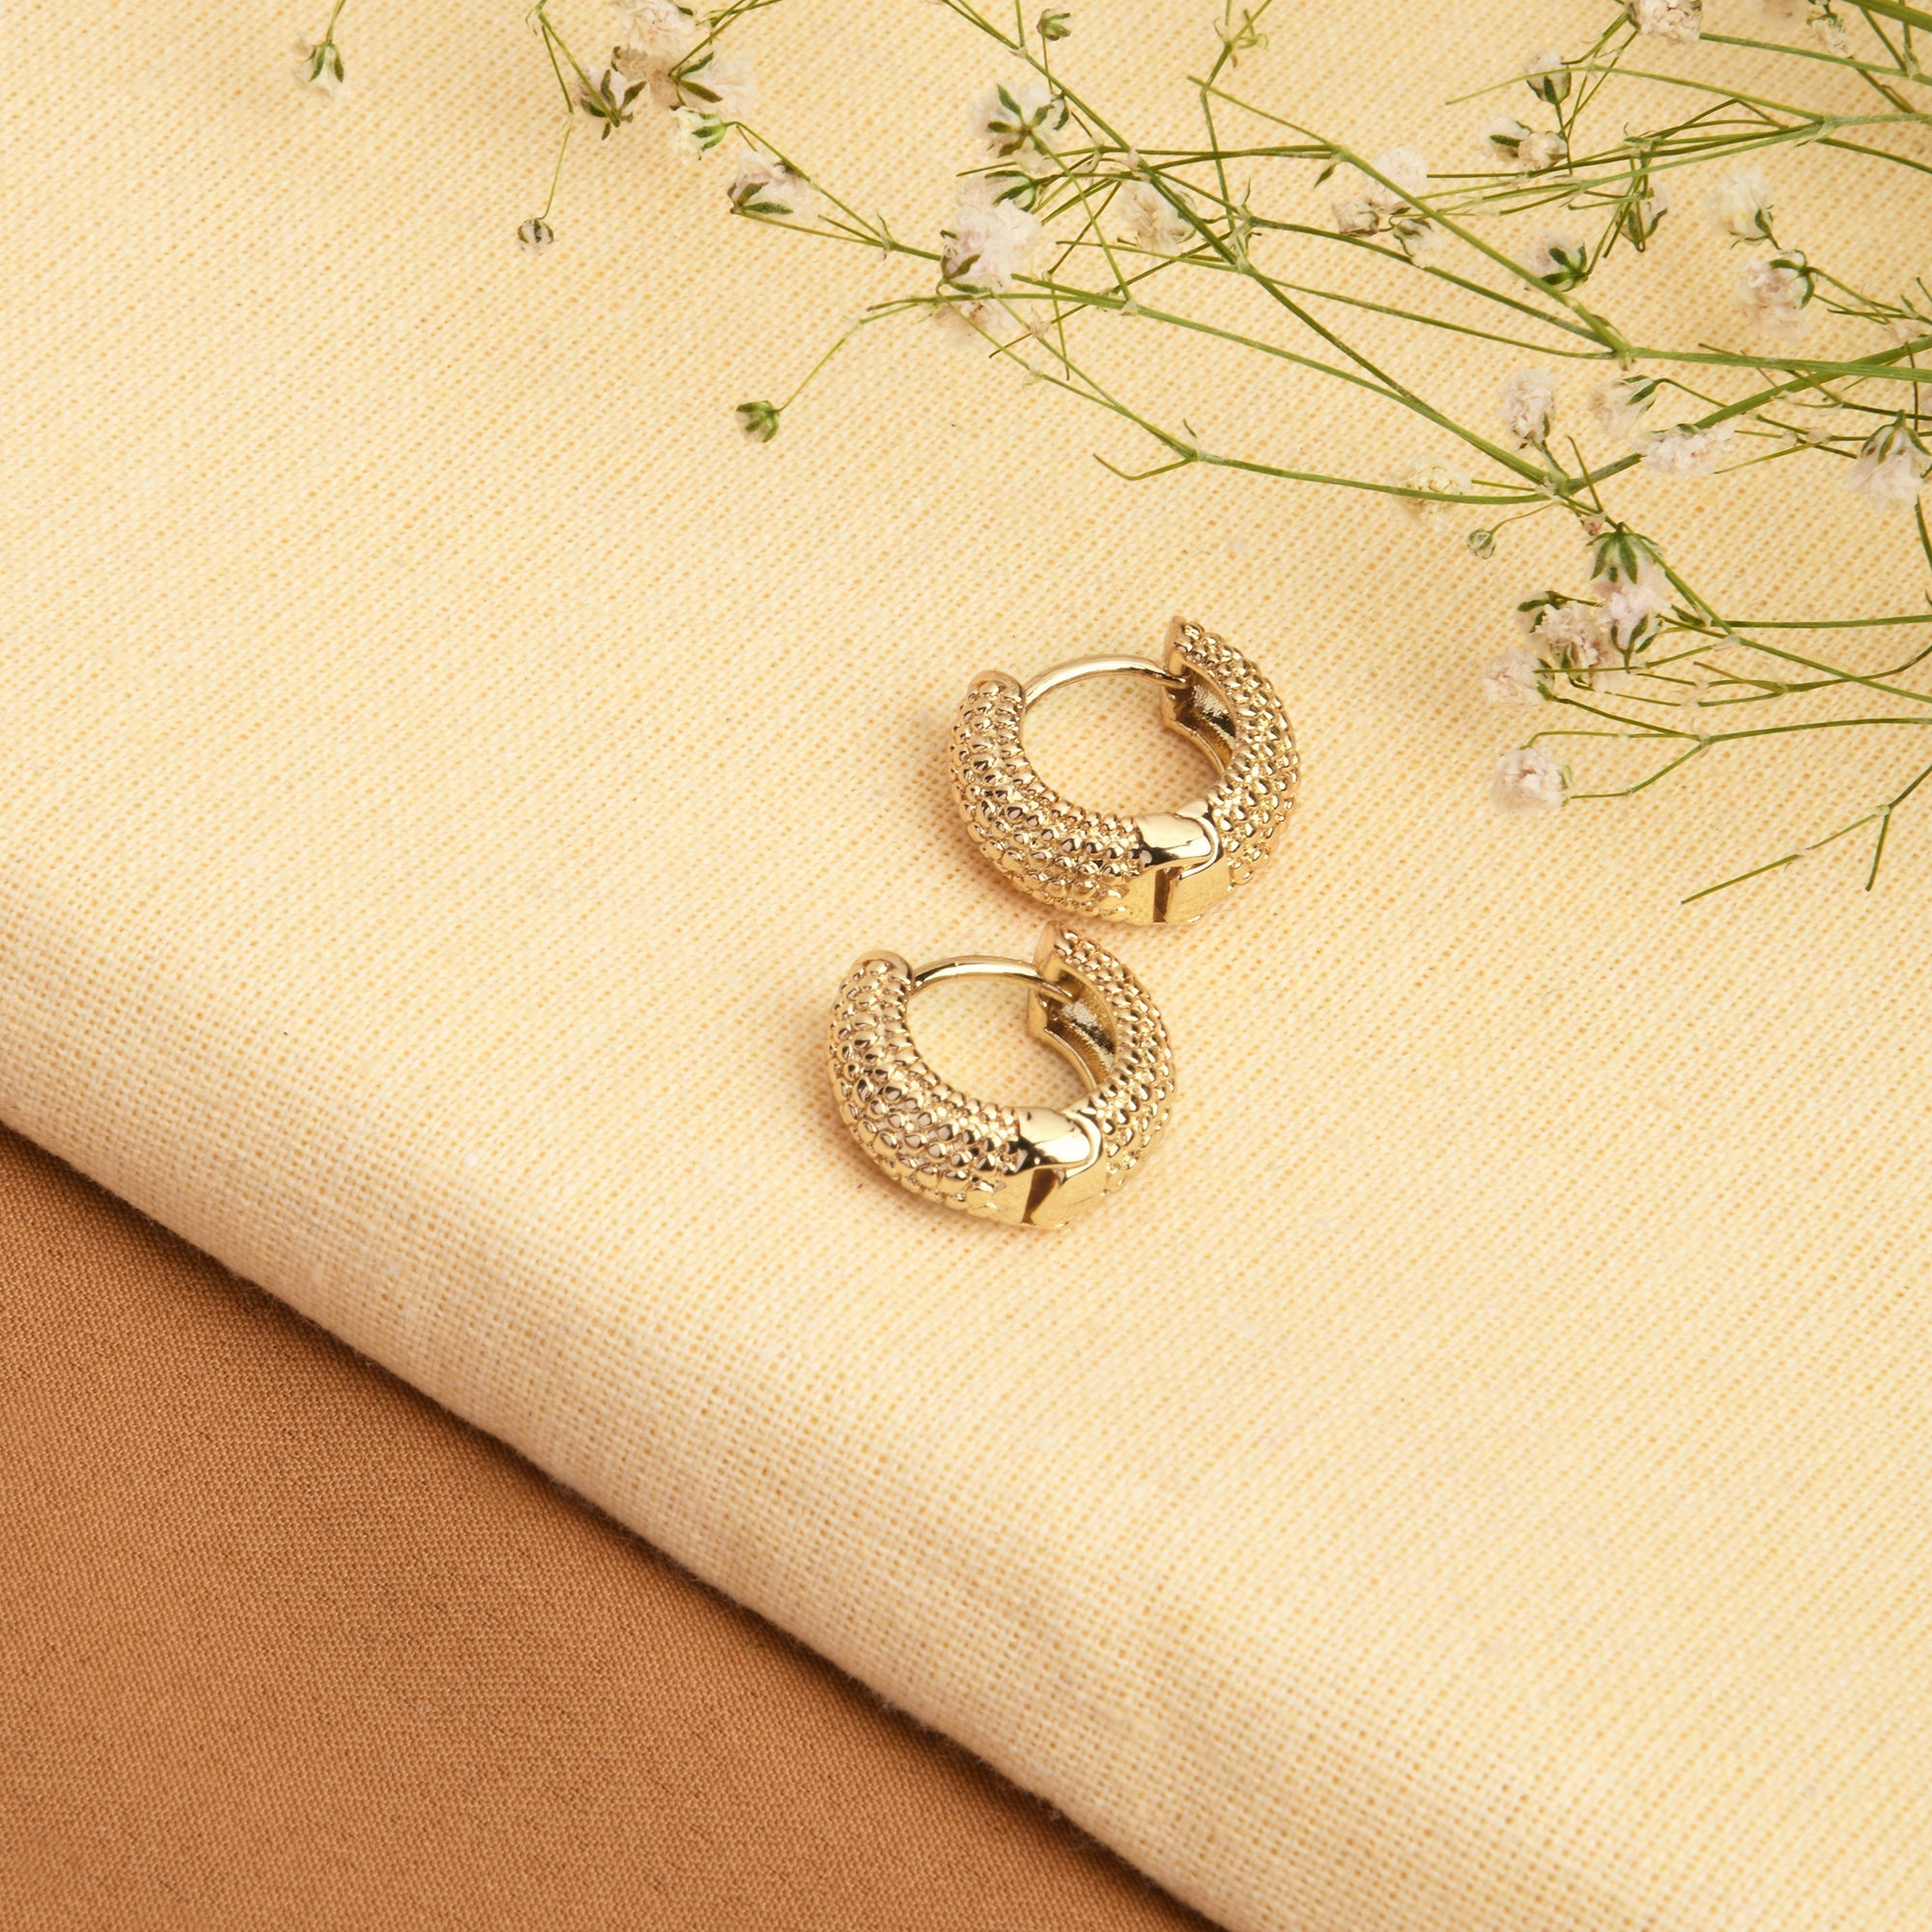 Accessorize London Women's Gold Mini Chunky Textured Hoop Earring